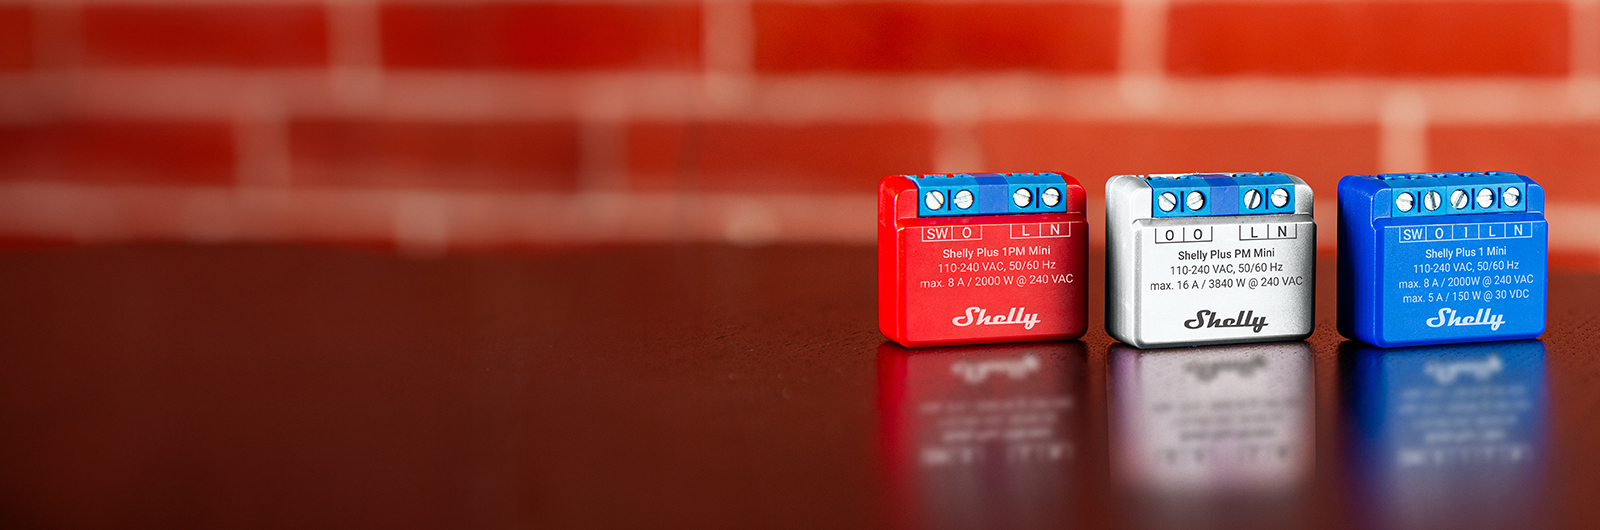 Shelly Plus 1 Mini - 1x relay 240V/8A WiFi/Bluetooth Botland